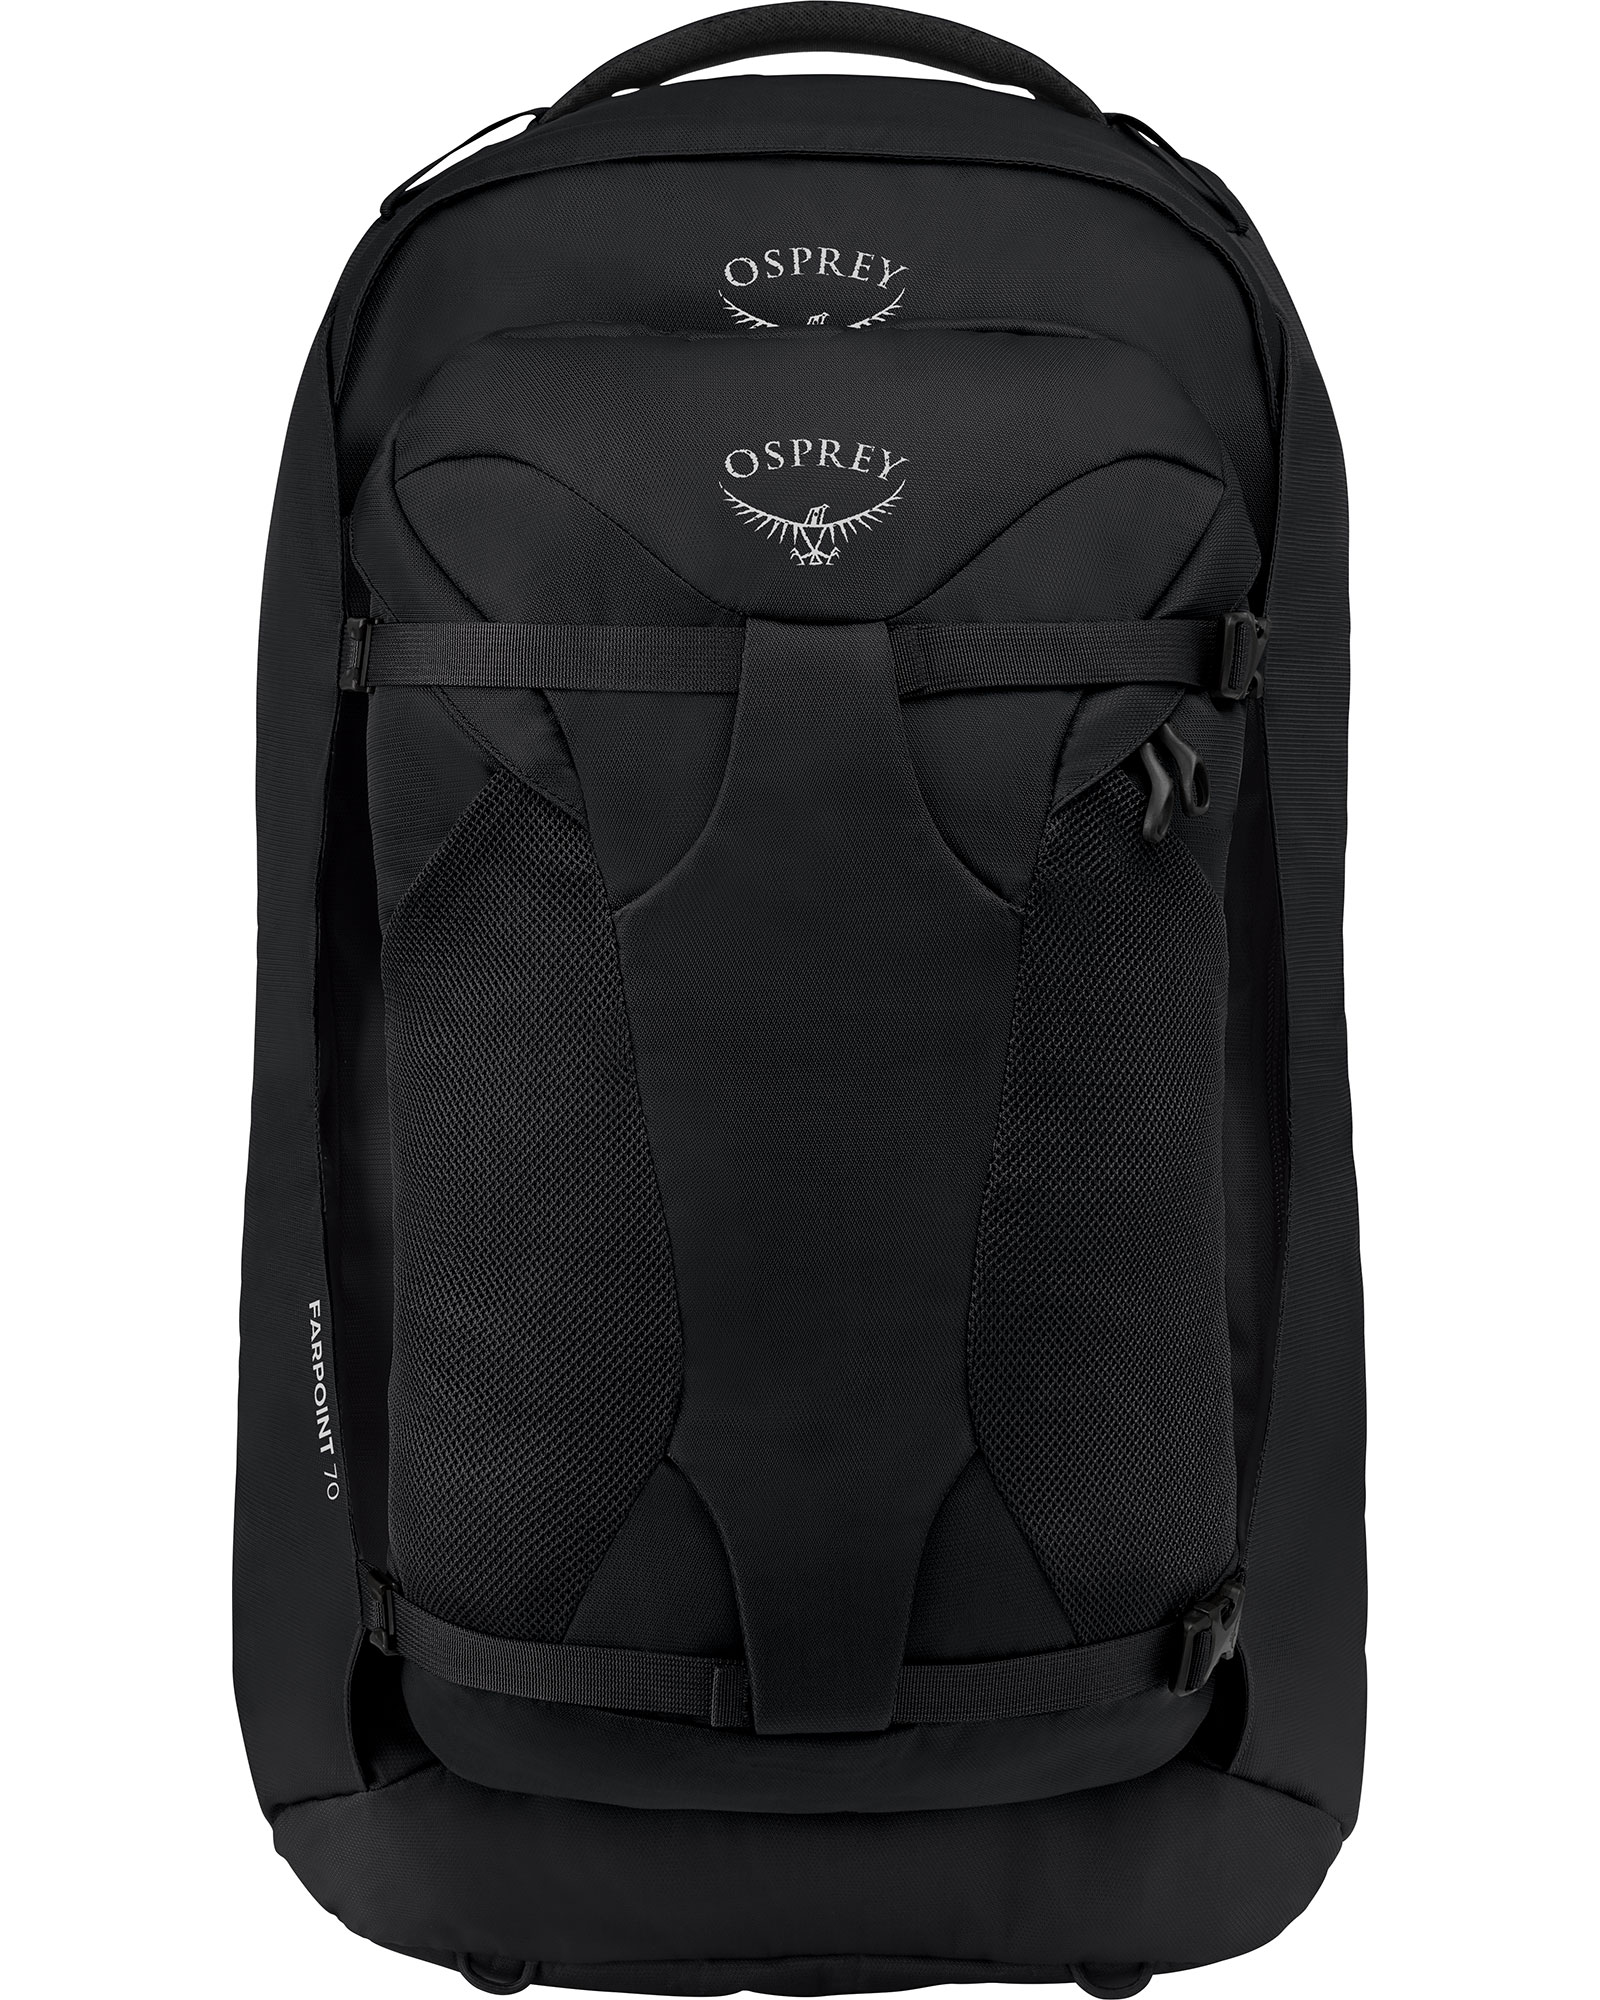 Osprey Farpoint 70 Men’s Backpack - black